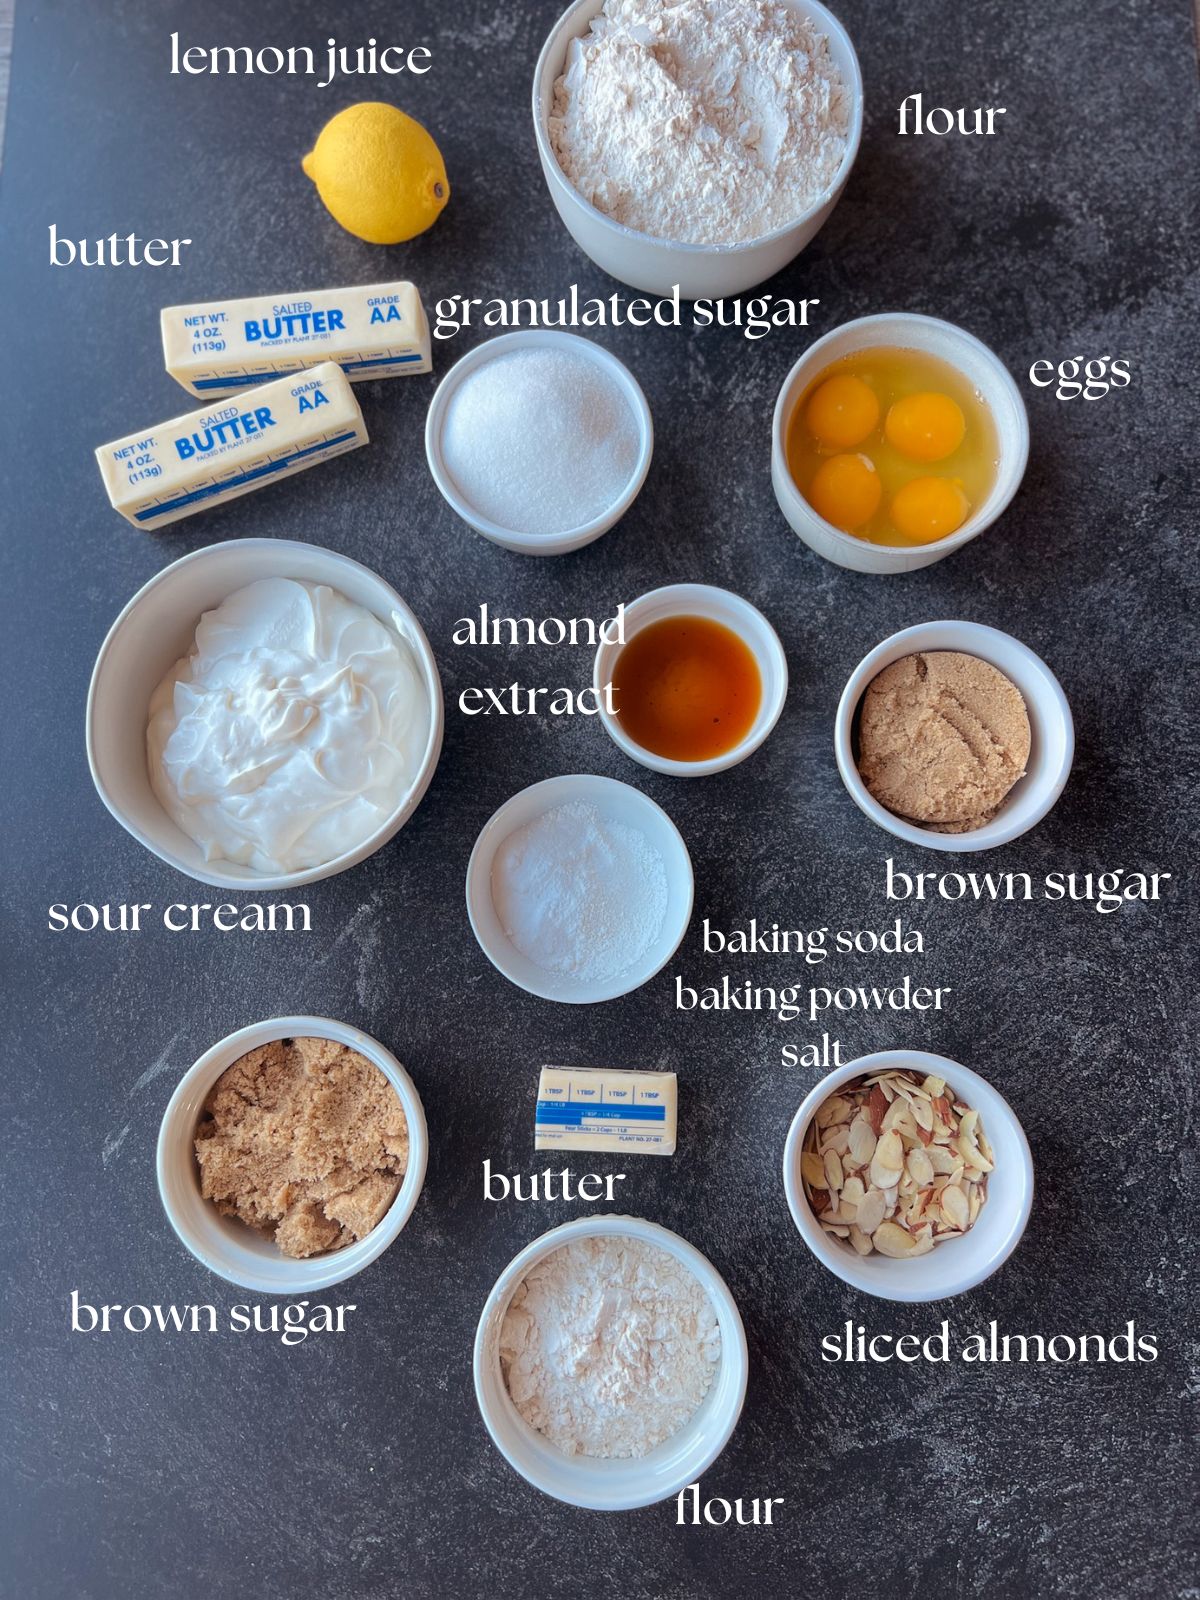 The almond coffee cake ingredients: flour, butter, granulated sugar, brown sugar, butter, almond extract, baking soda, baking powder, salt, lemon juice, sour cream, eggs, sliced almonds.